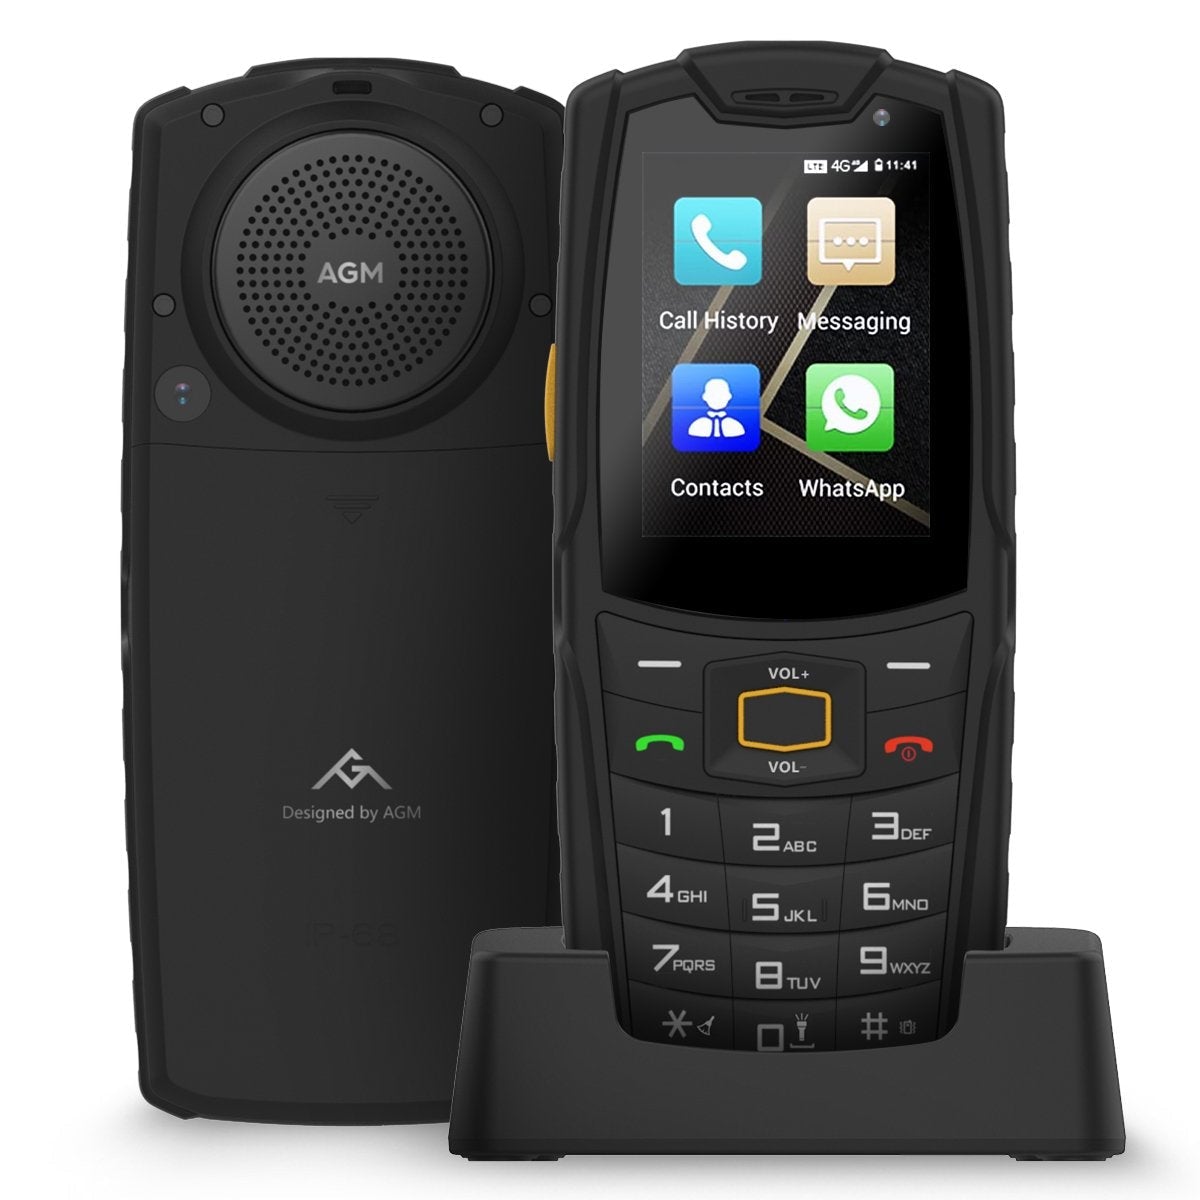 AGM Glory SE Móvil Resistente Teléfono Dual 5G Móvil Indestructible  Snapdragon 480, 110dB Altavoz, Cámara de